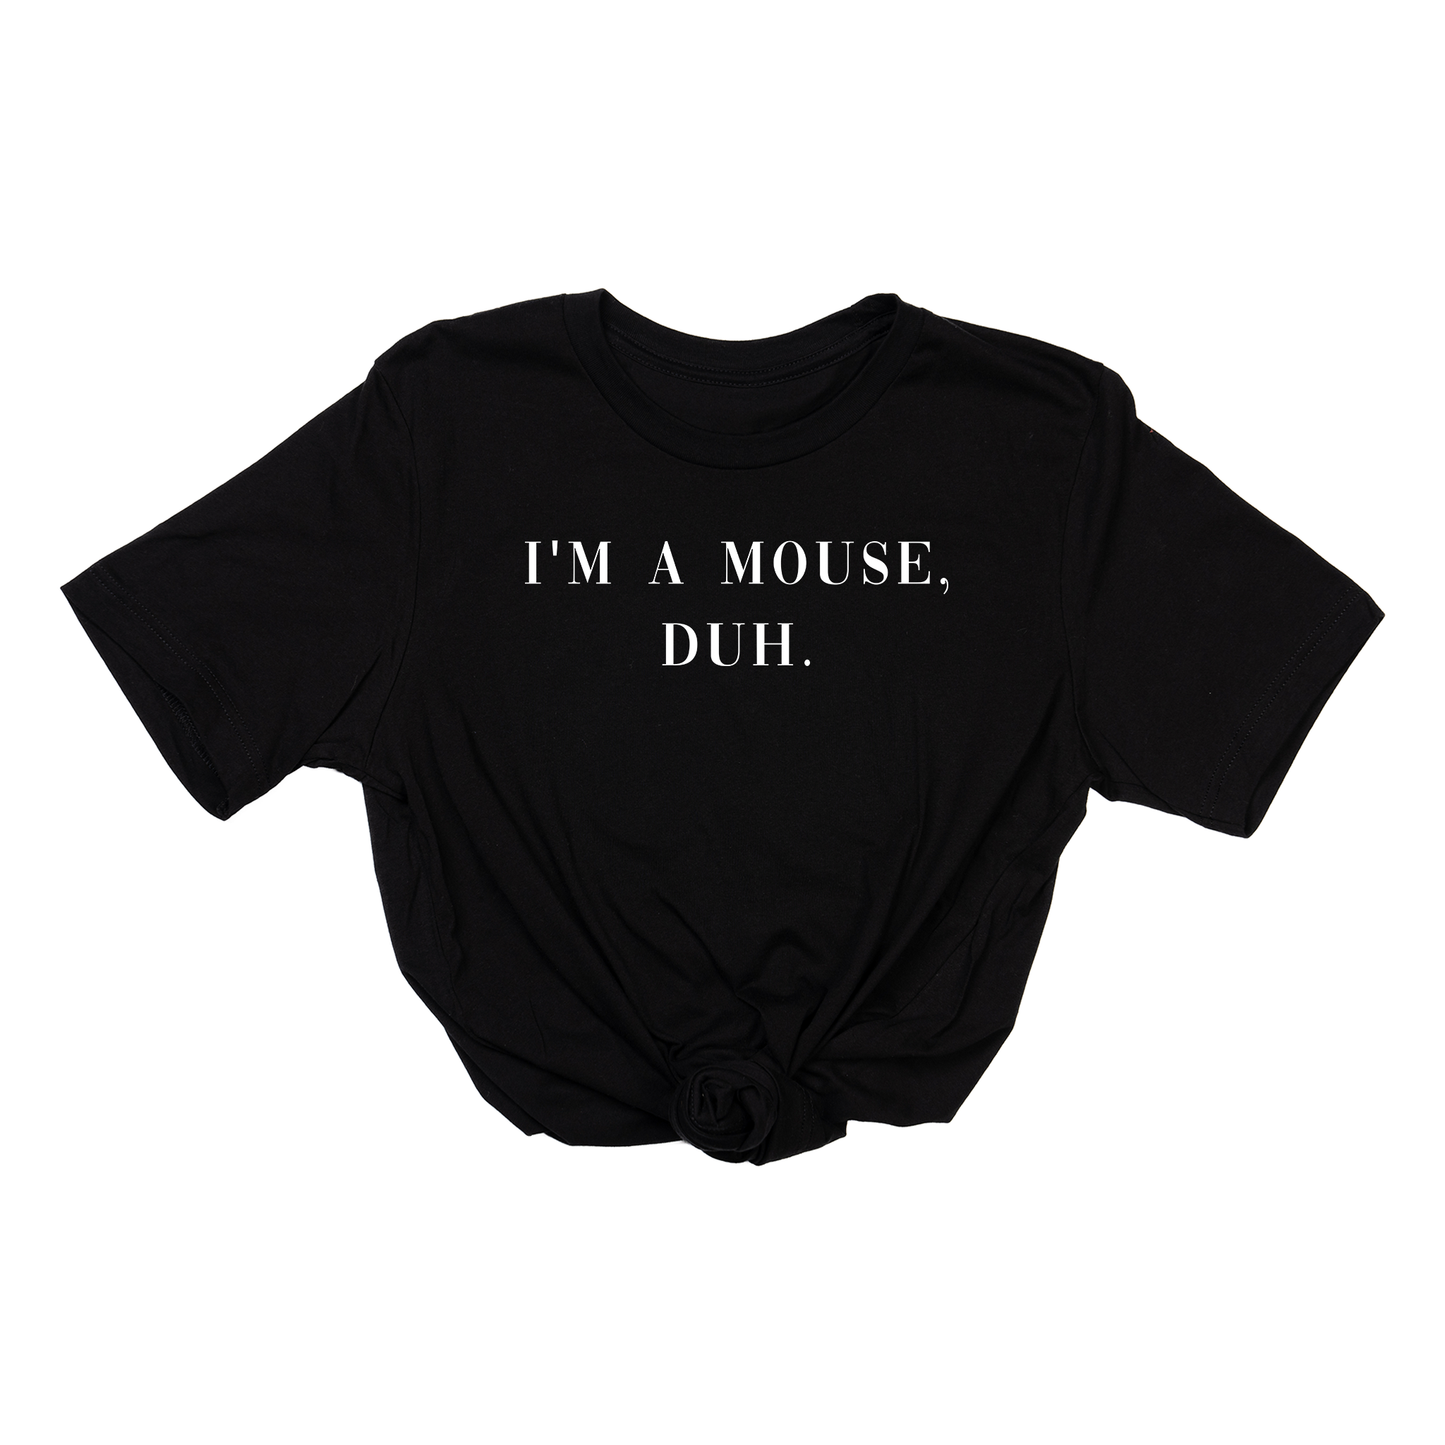 I'm a mouse, duh.  (White) - Tee (Black)